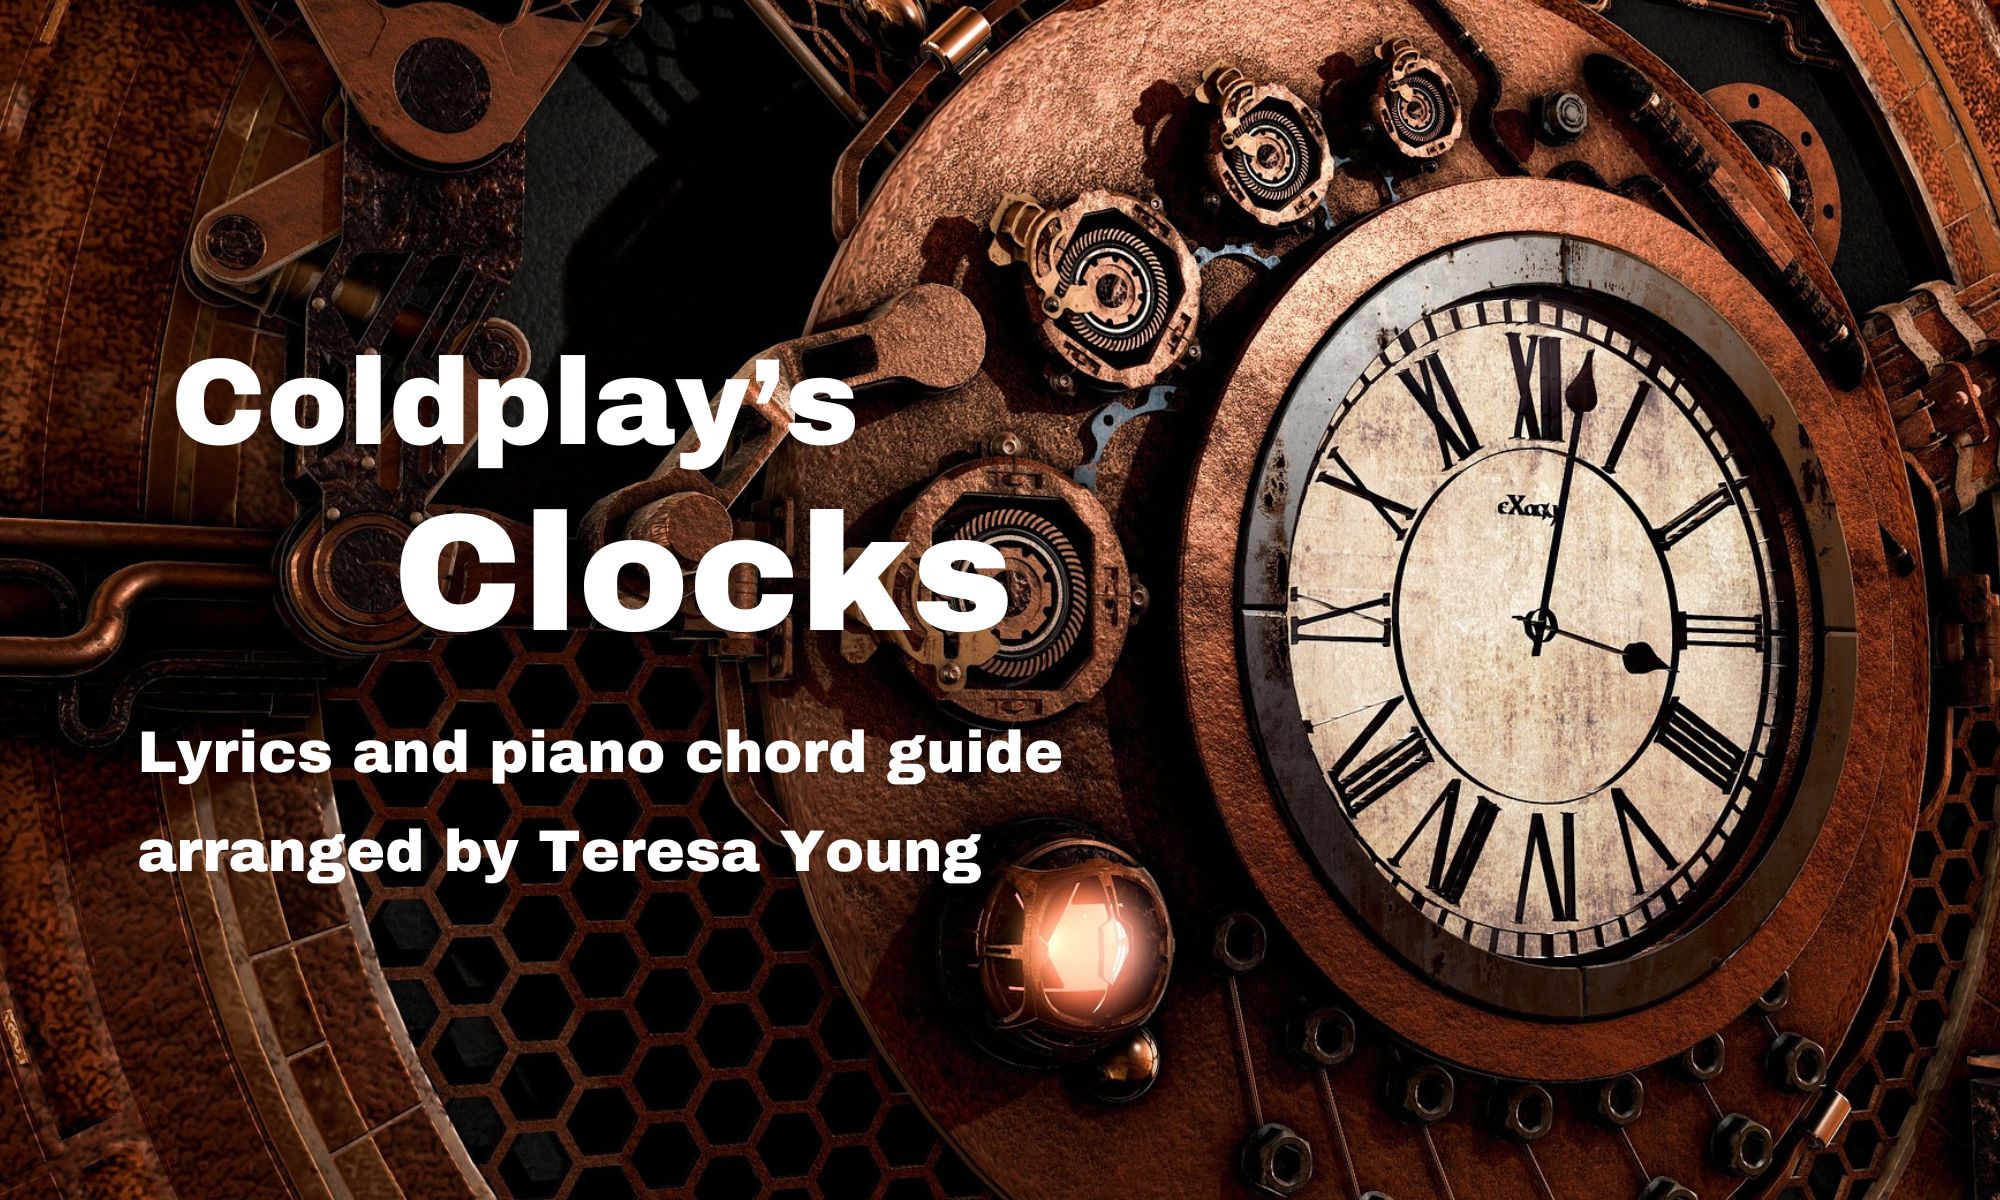 Coldplay's Clocks piano chord guide